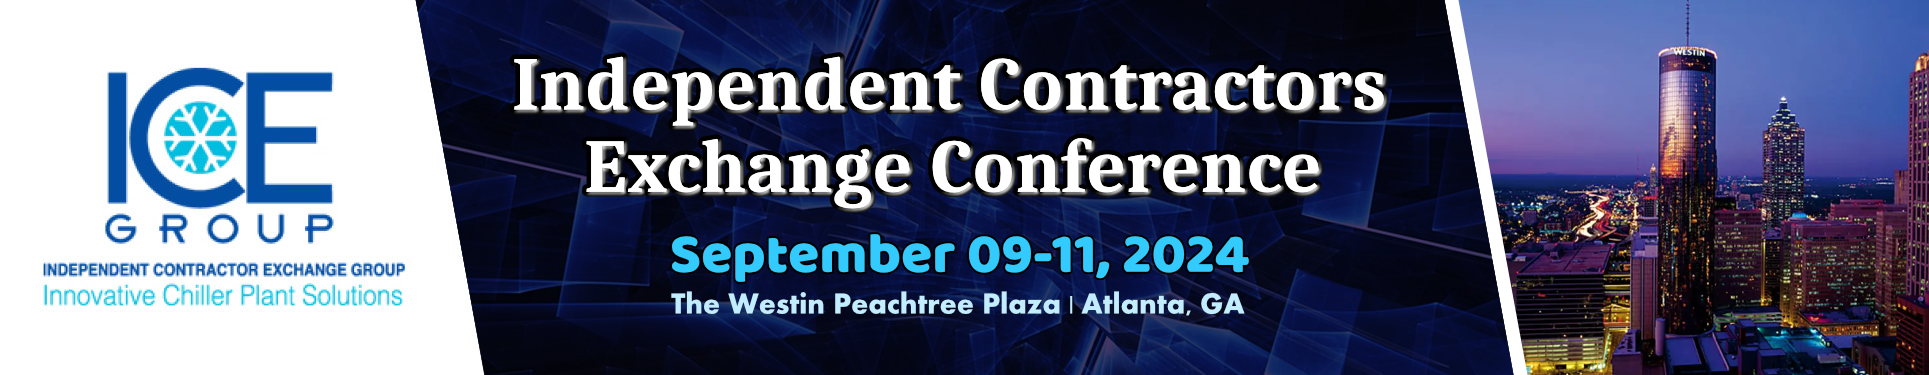 Independent Contractors Exchange Conference 2024 - Sponsorship Commitment